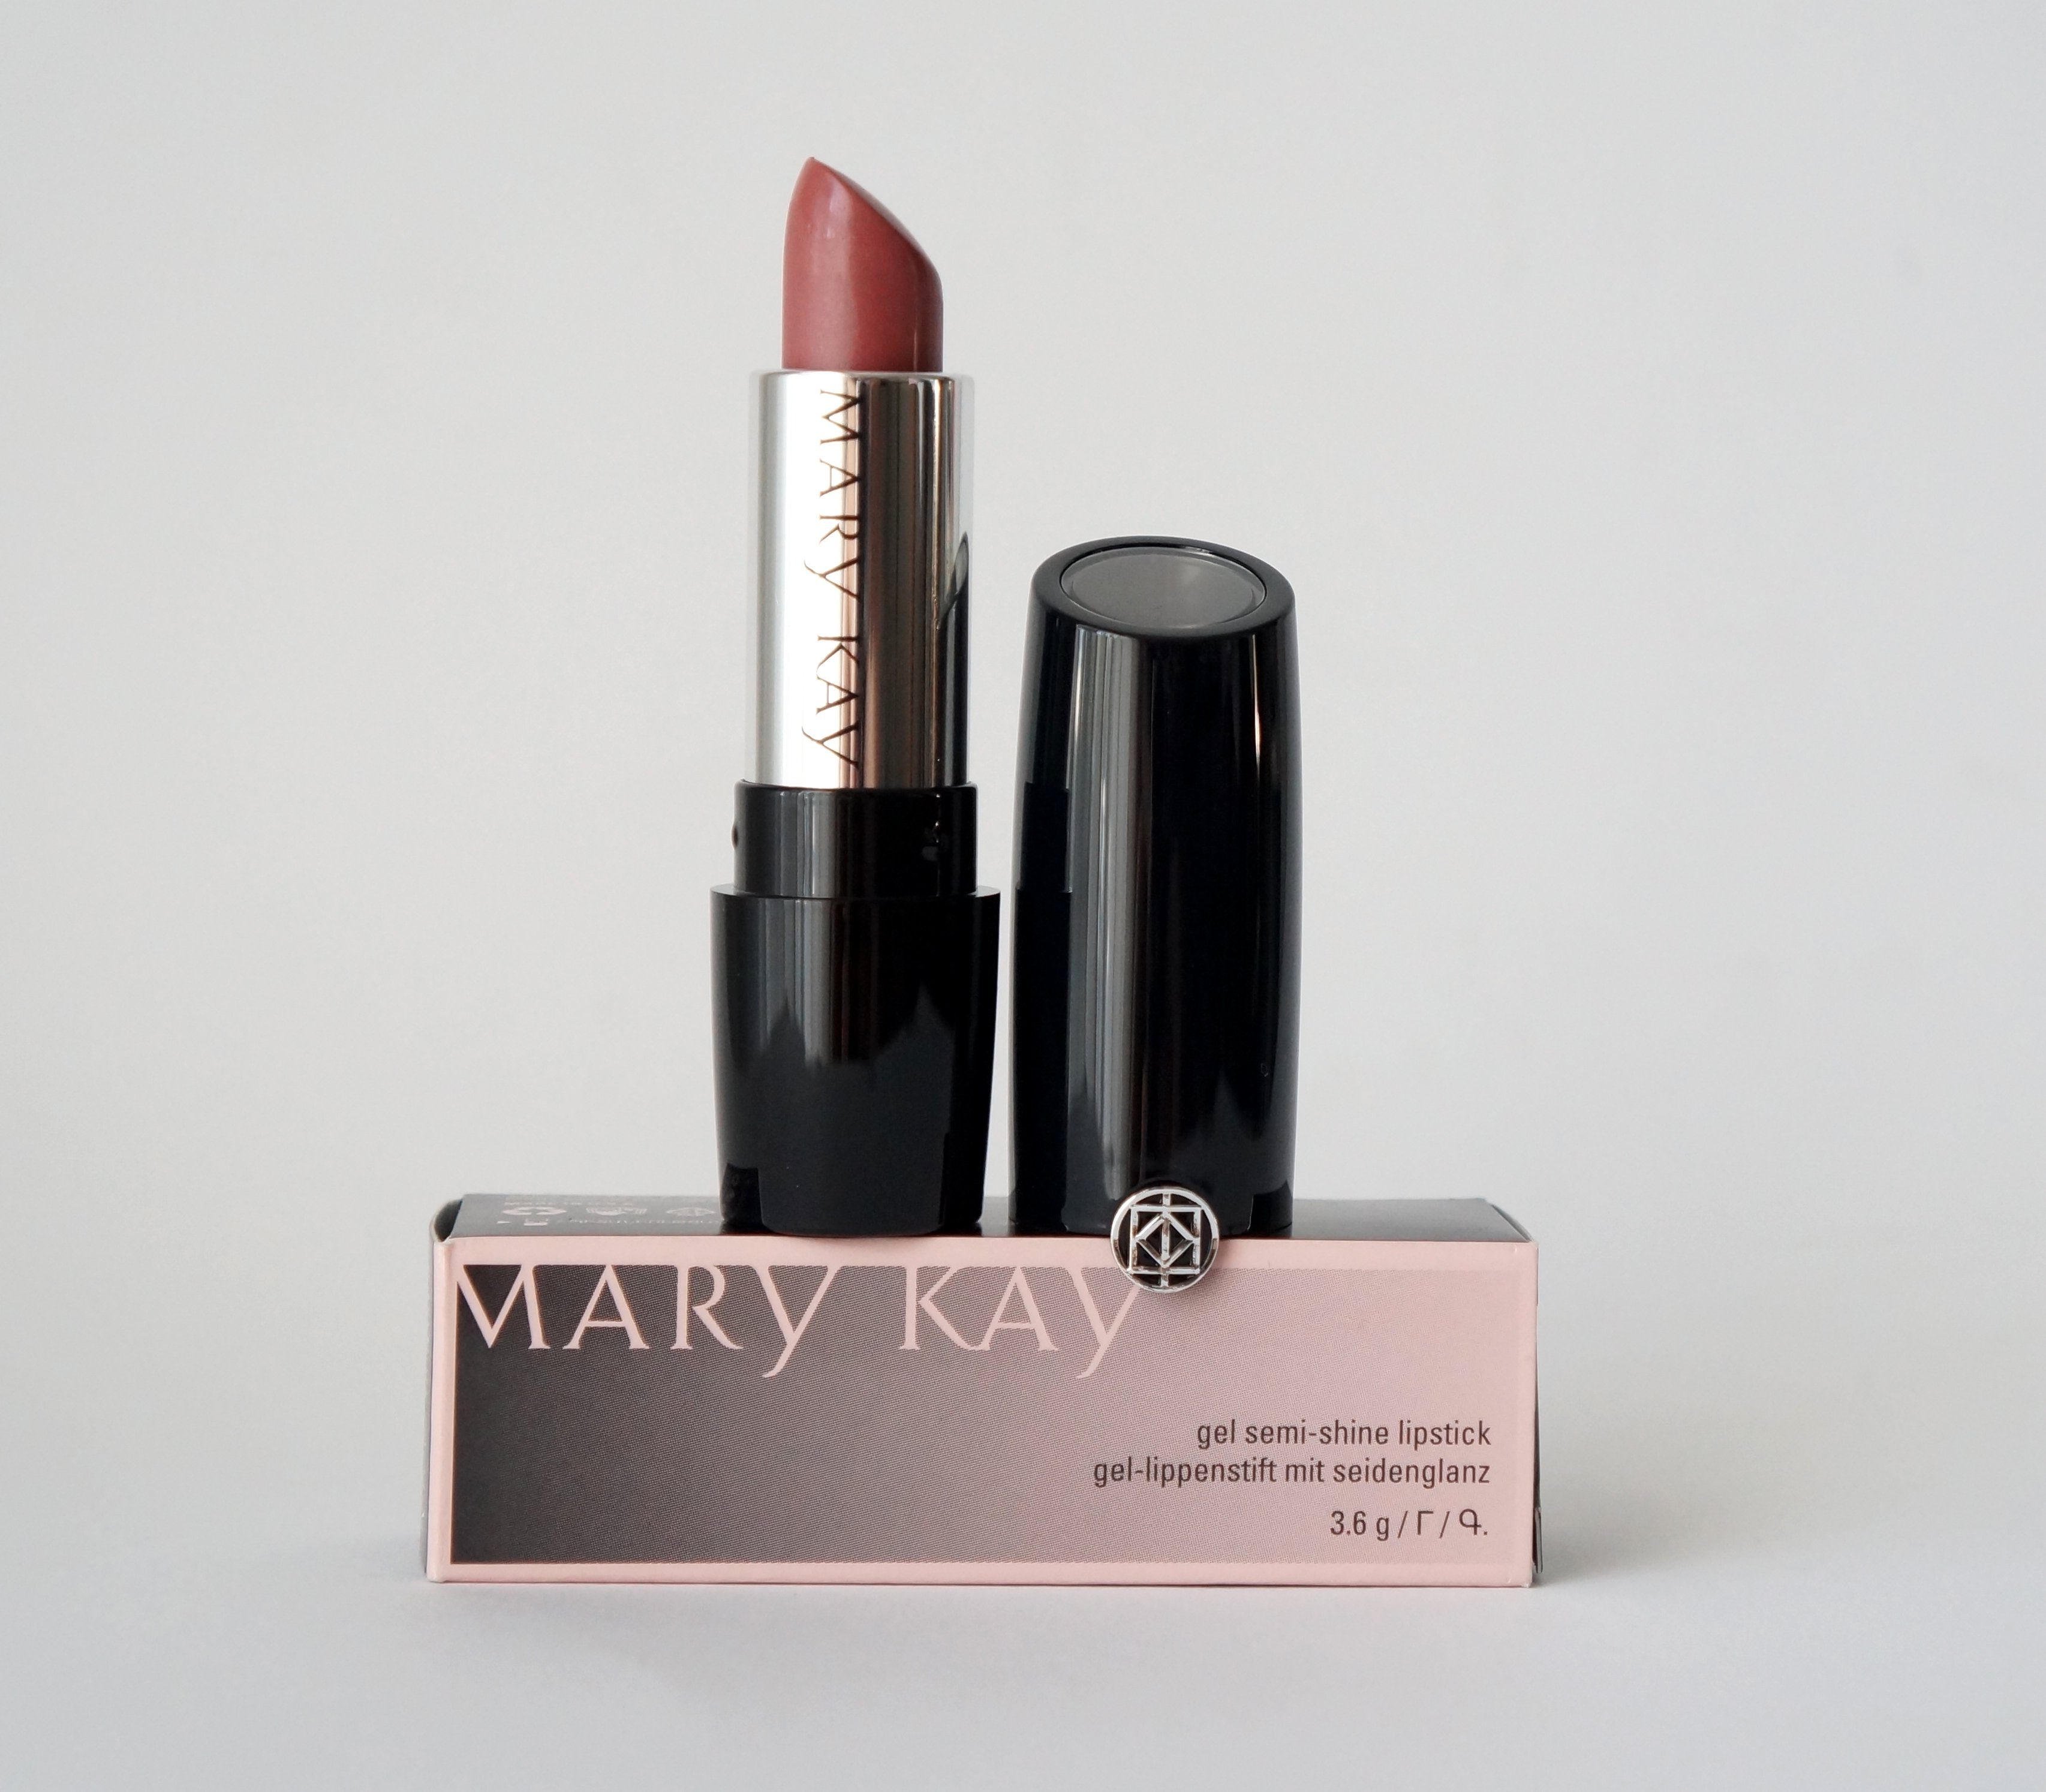 Mary Kay Lippenstift Gel Semi-Shine Lipstick Lippenstift mit Seidenglanz 3,6g